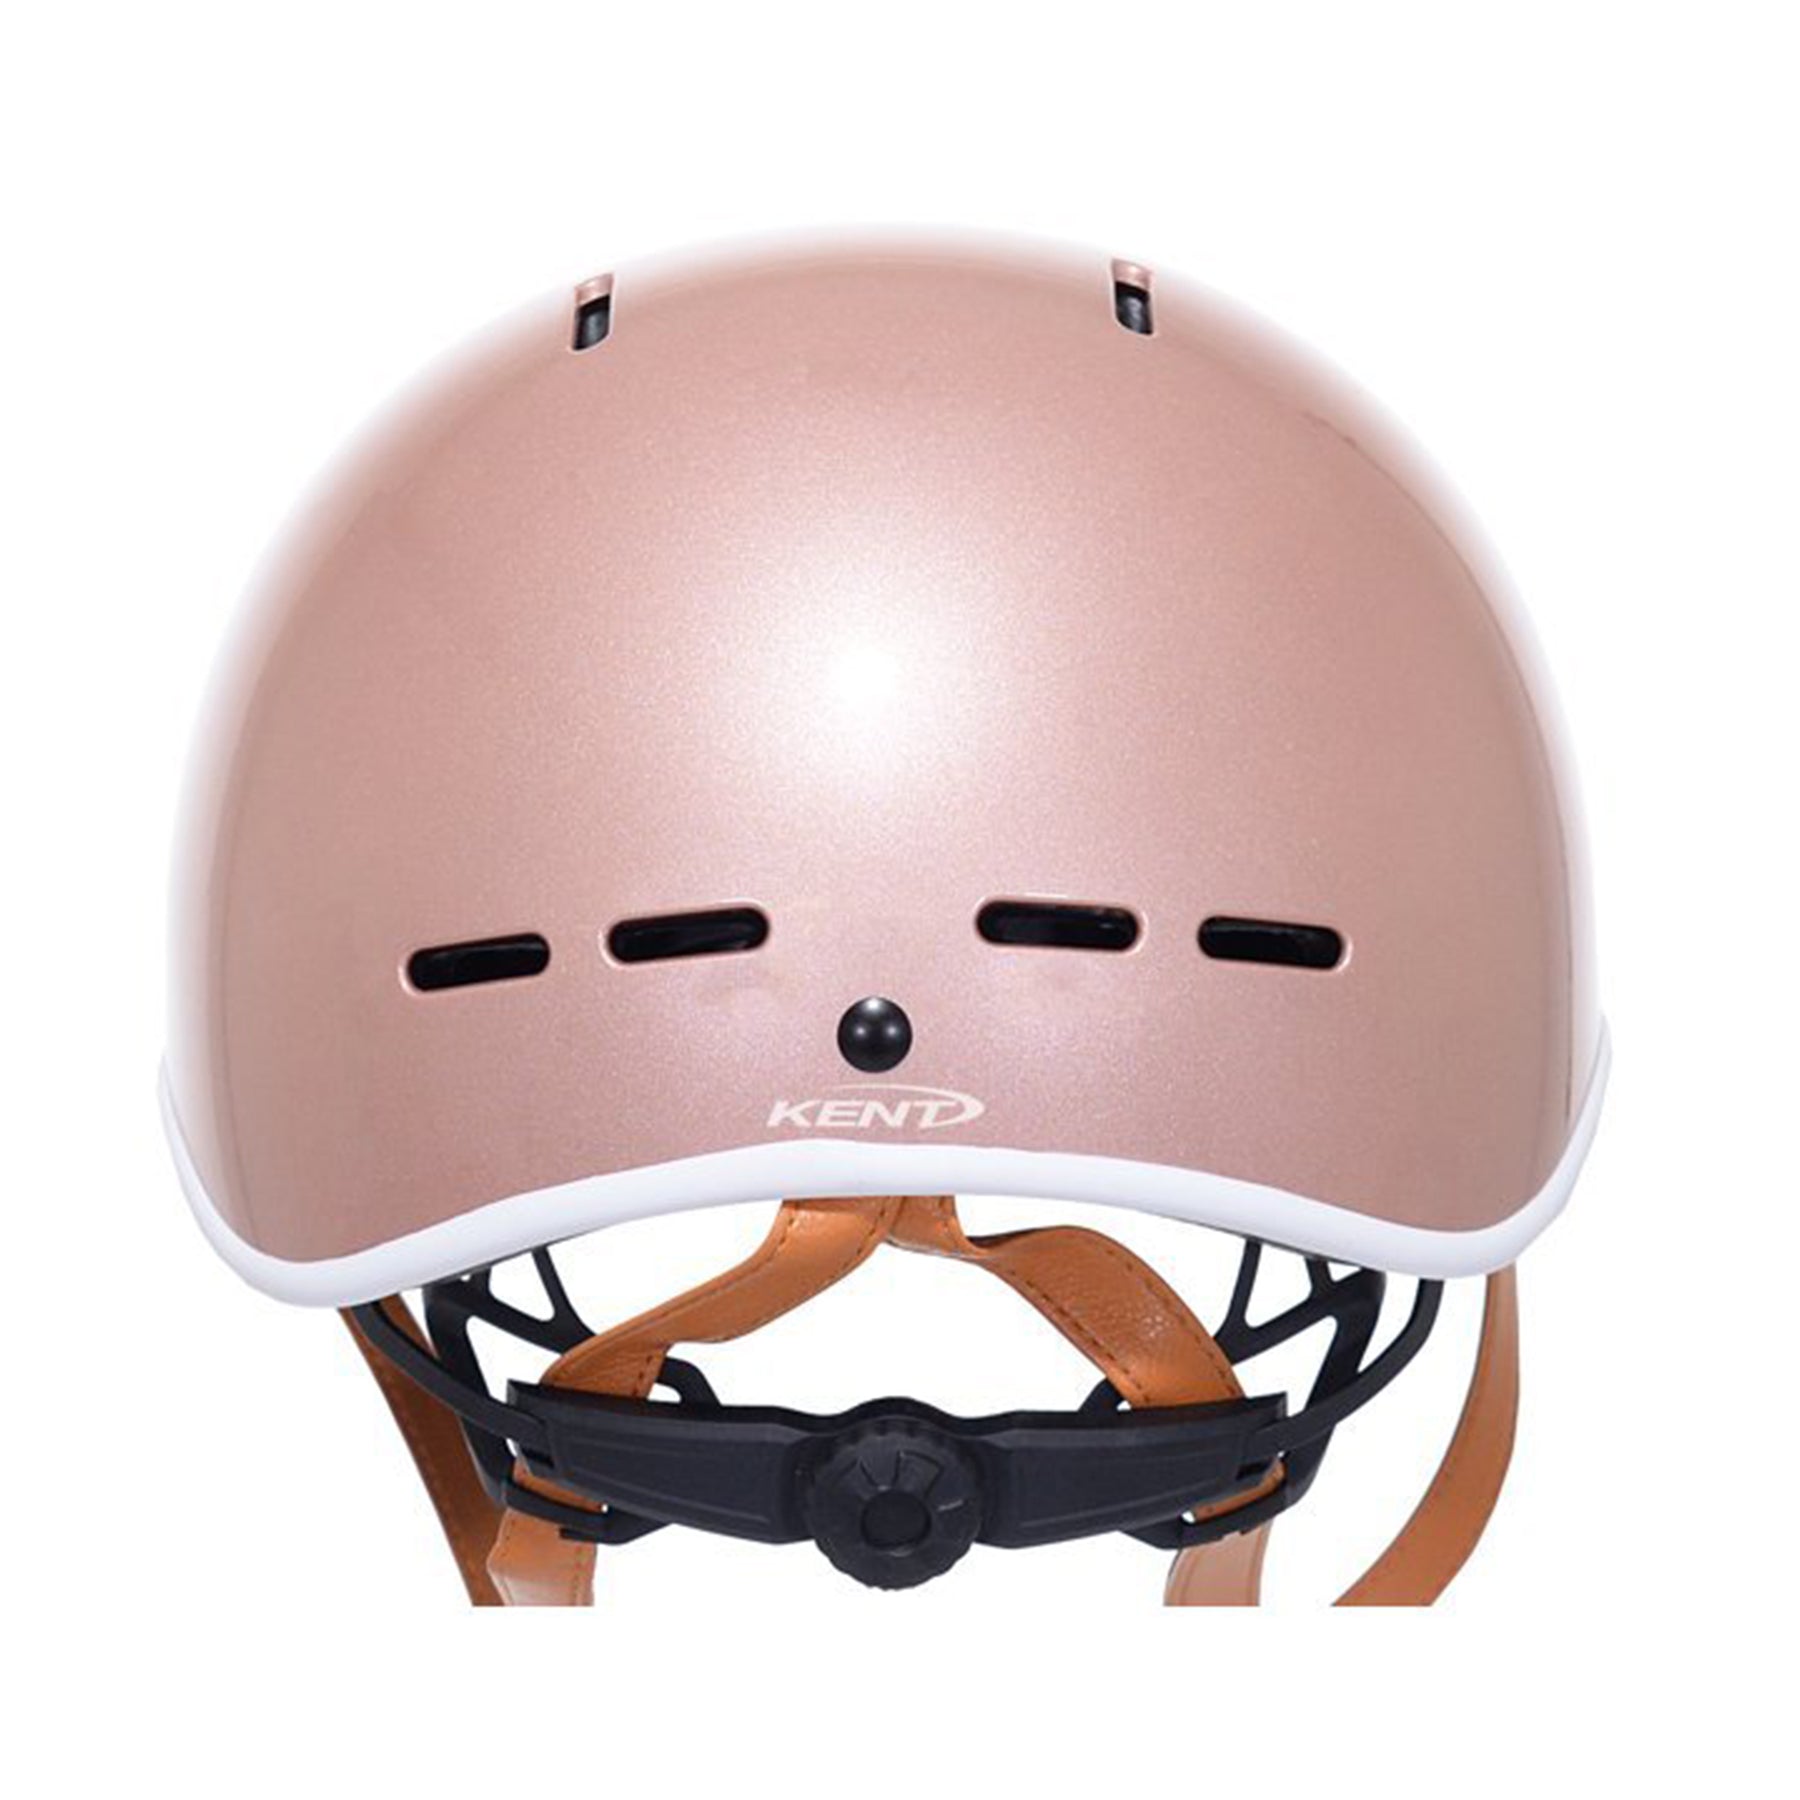 Kent Adult Commuter Helmet | Helmet for Adults Ages 13+